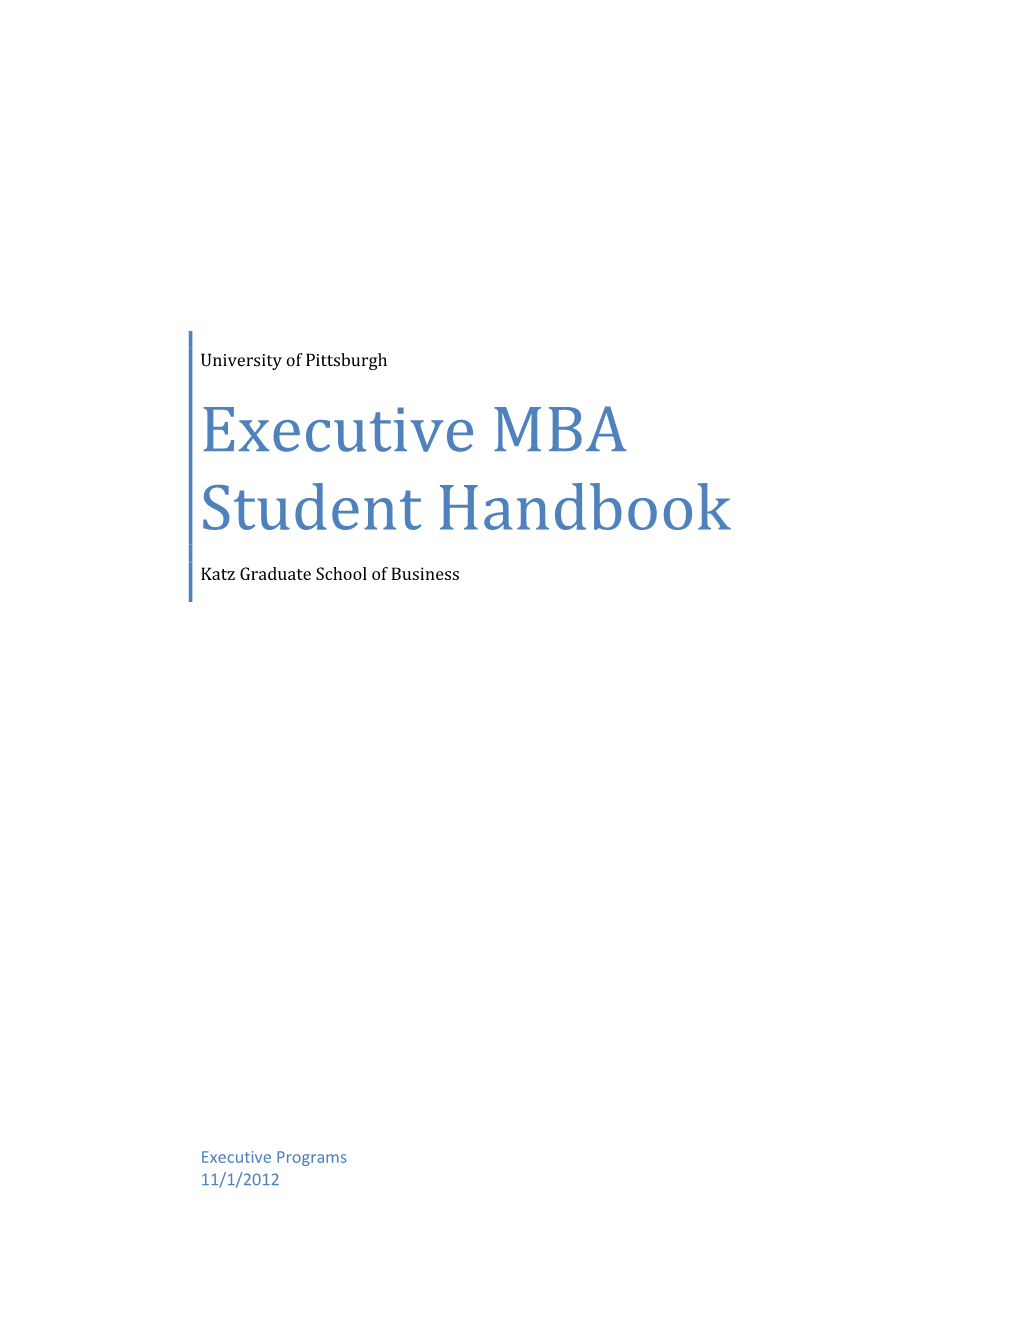 Executive MBA Student Handbook